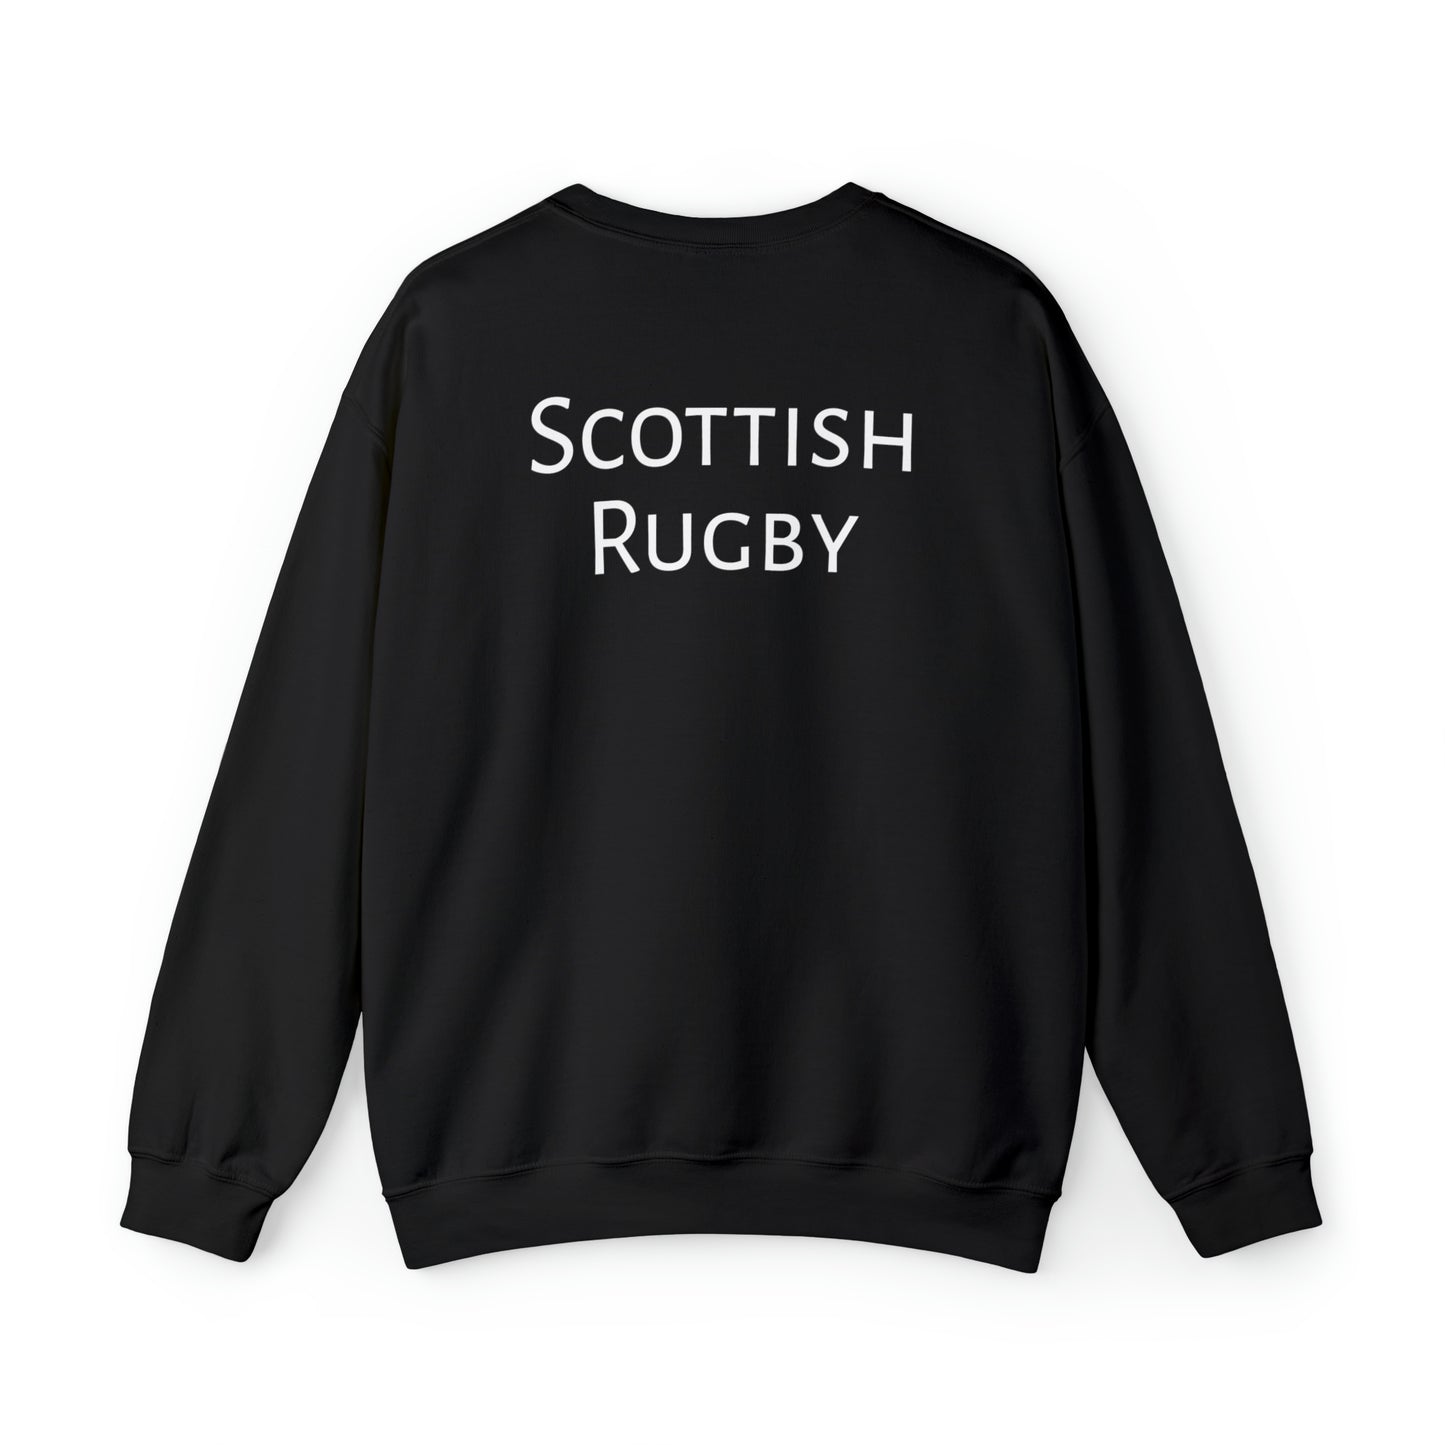 Celebrating Scotland - dark sweatshirts